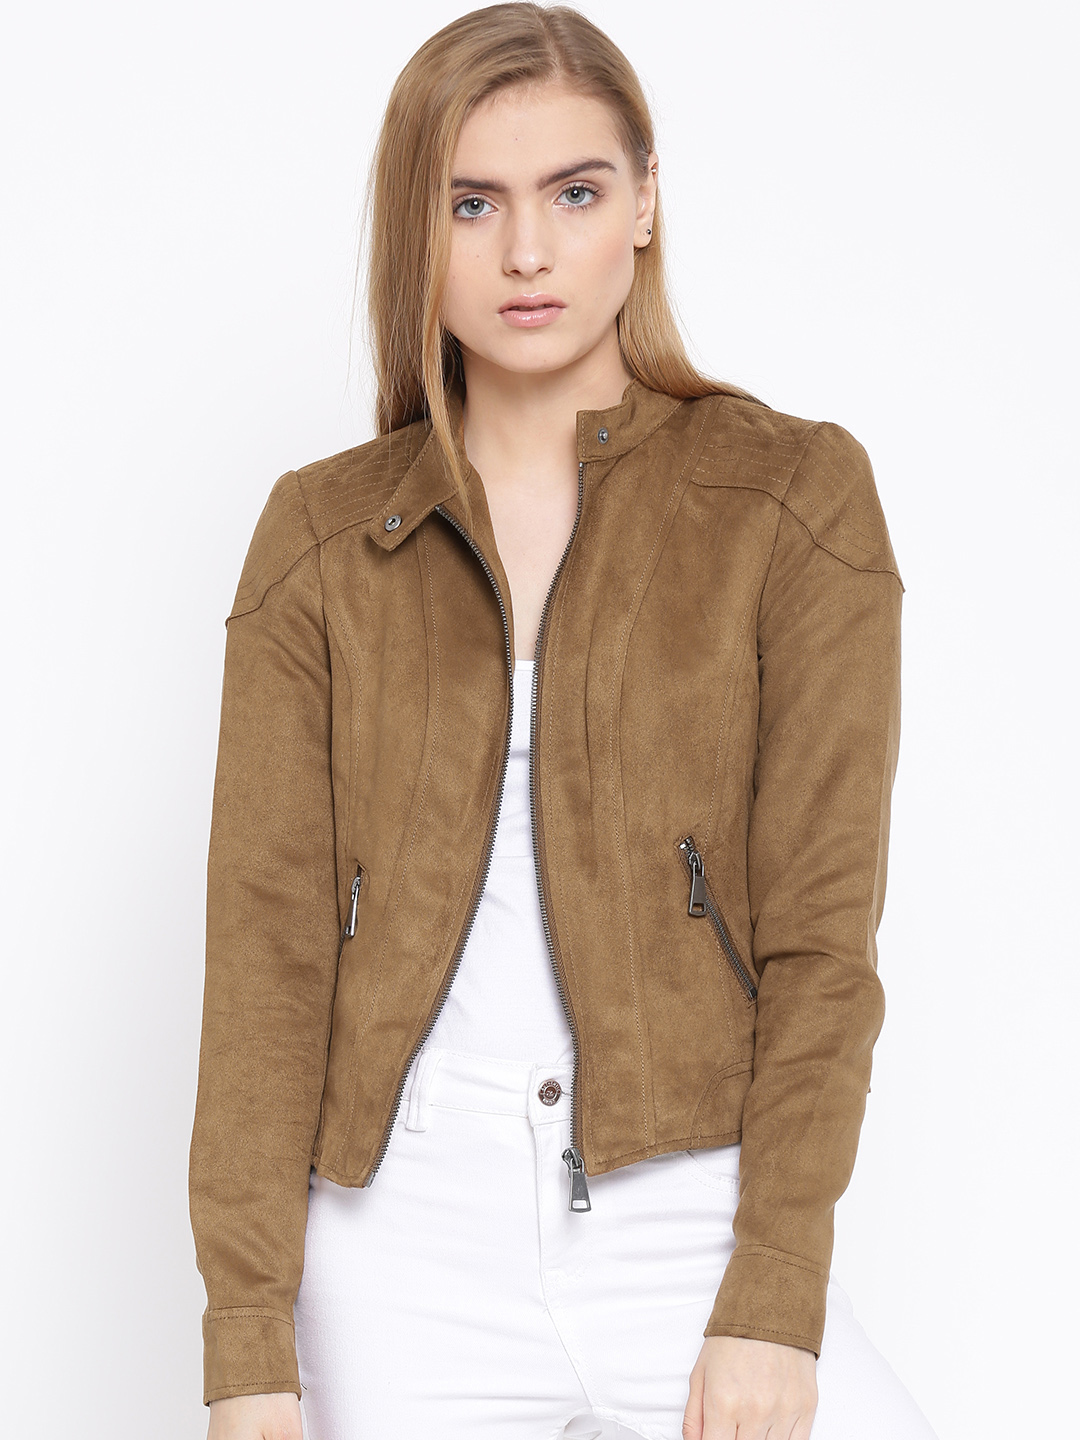 A Model wearing Vero Moda Brown Jacket